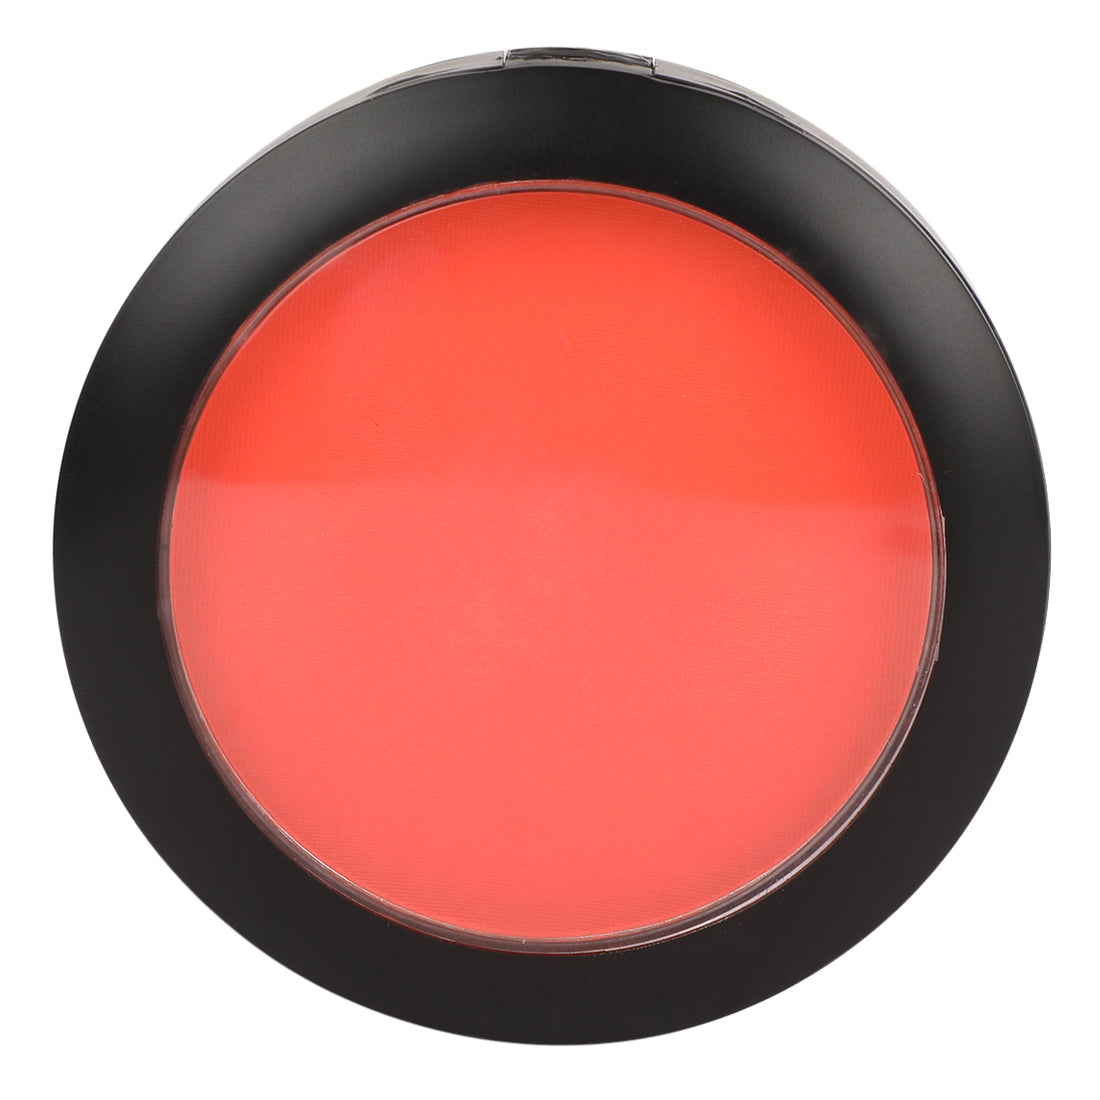 Sedell Professional Multi Blush Powder Dark Peach - 8gm